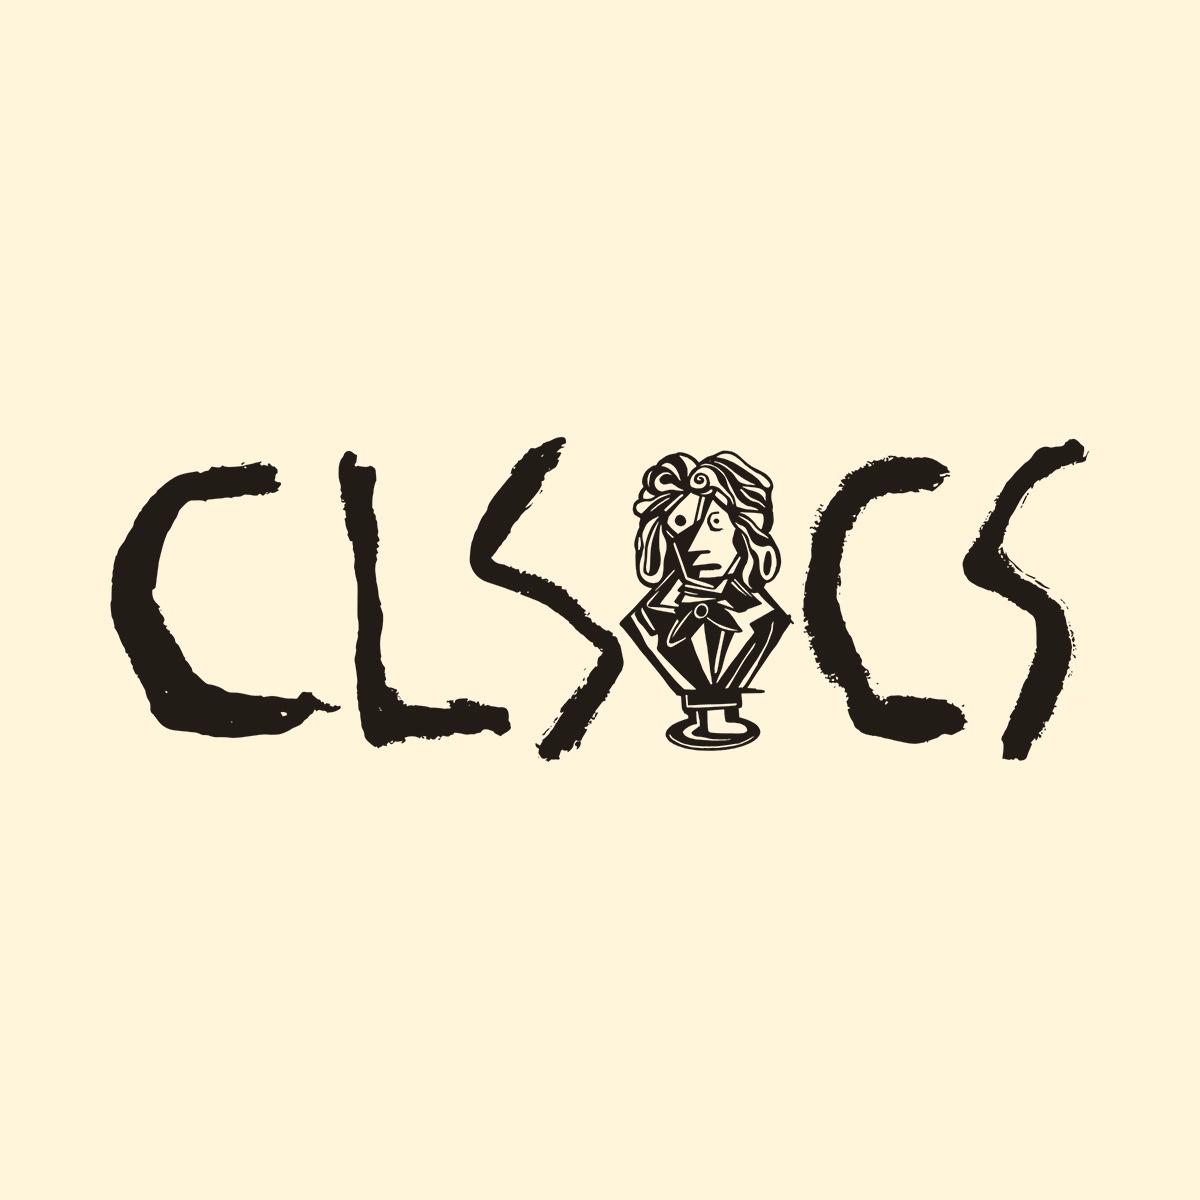 Clsics-logo